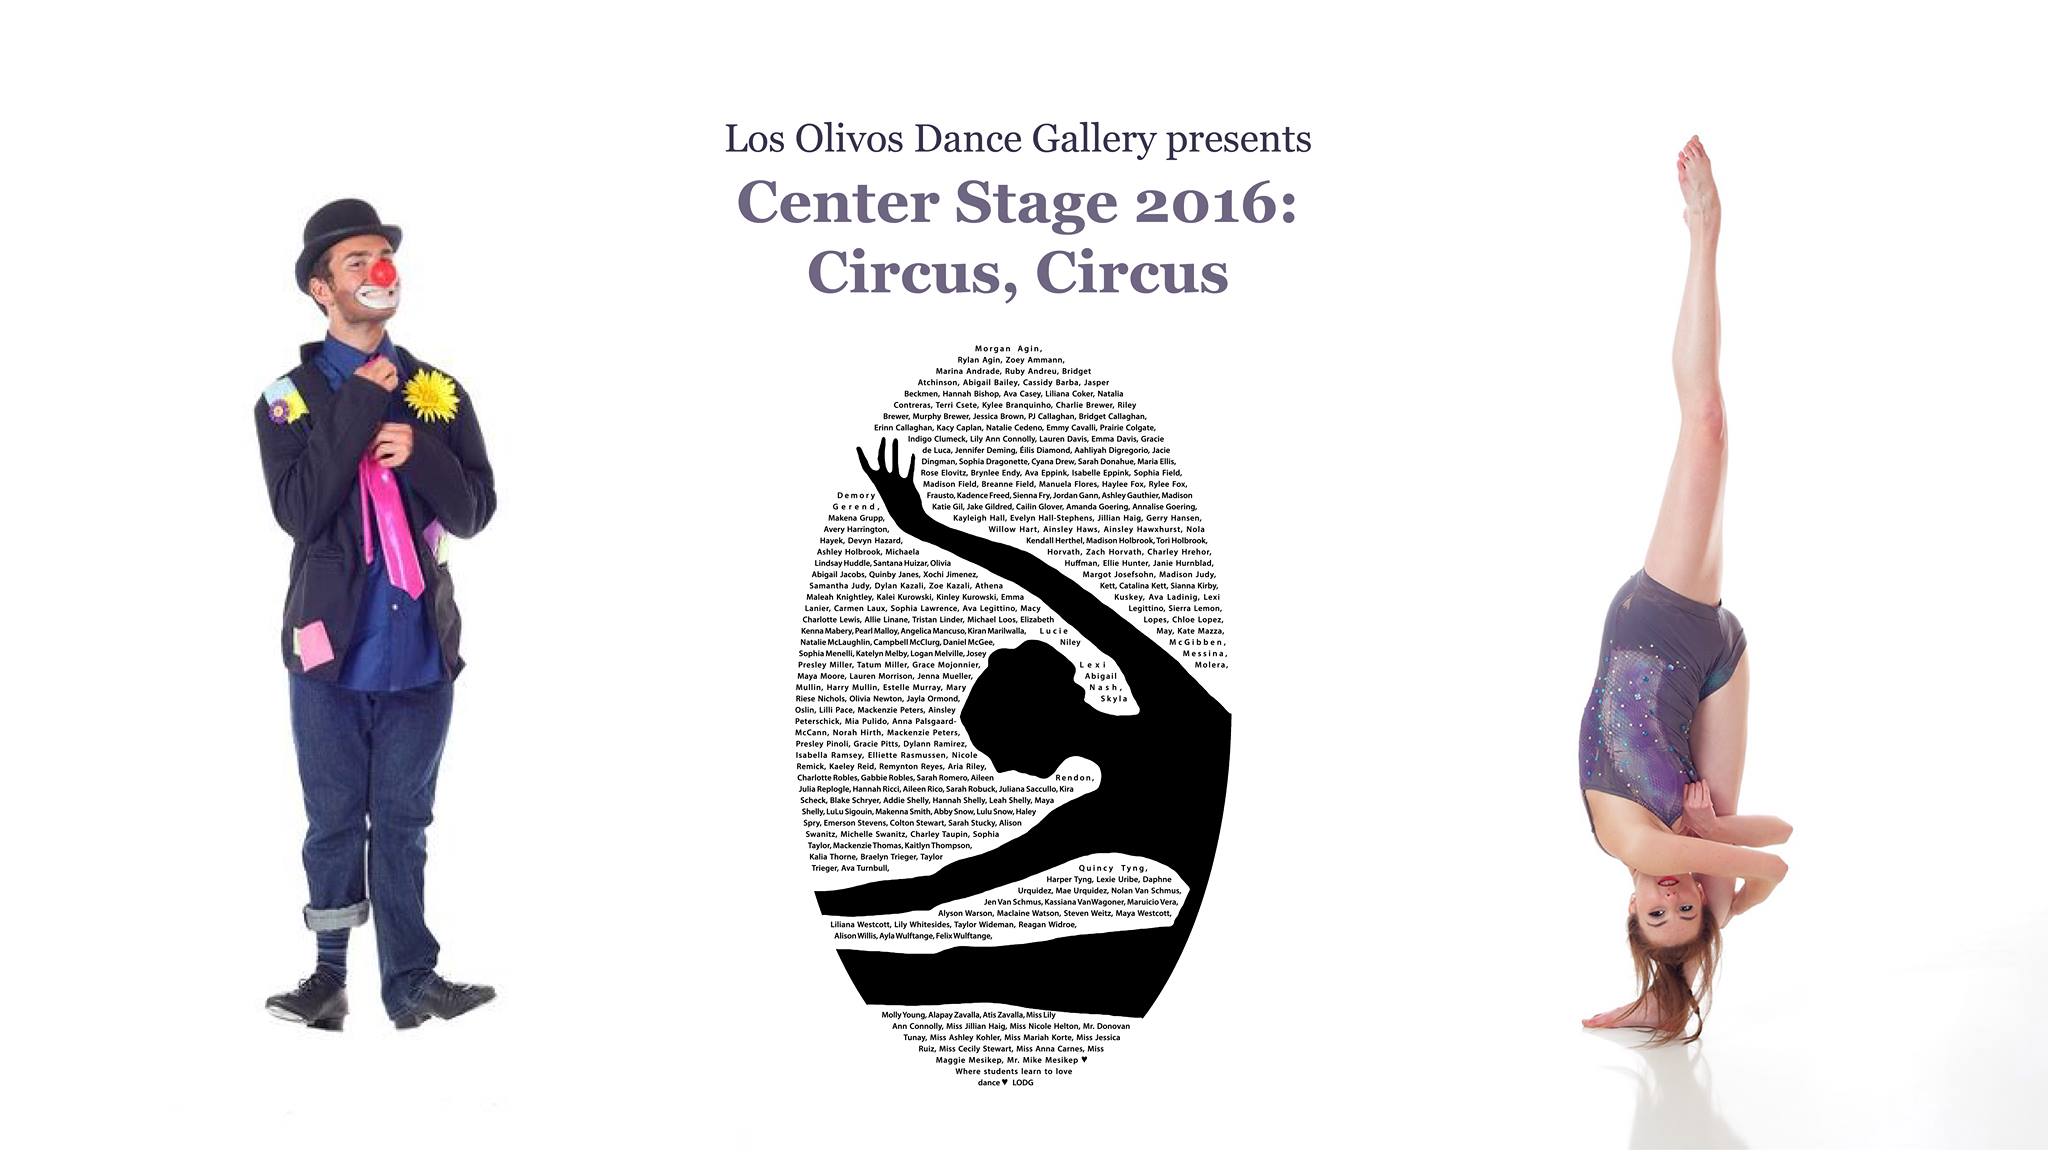 Los Olivos Dance Gallery Center Stage